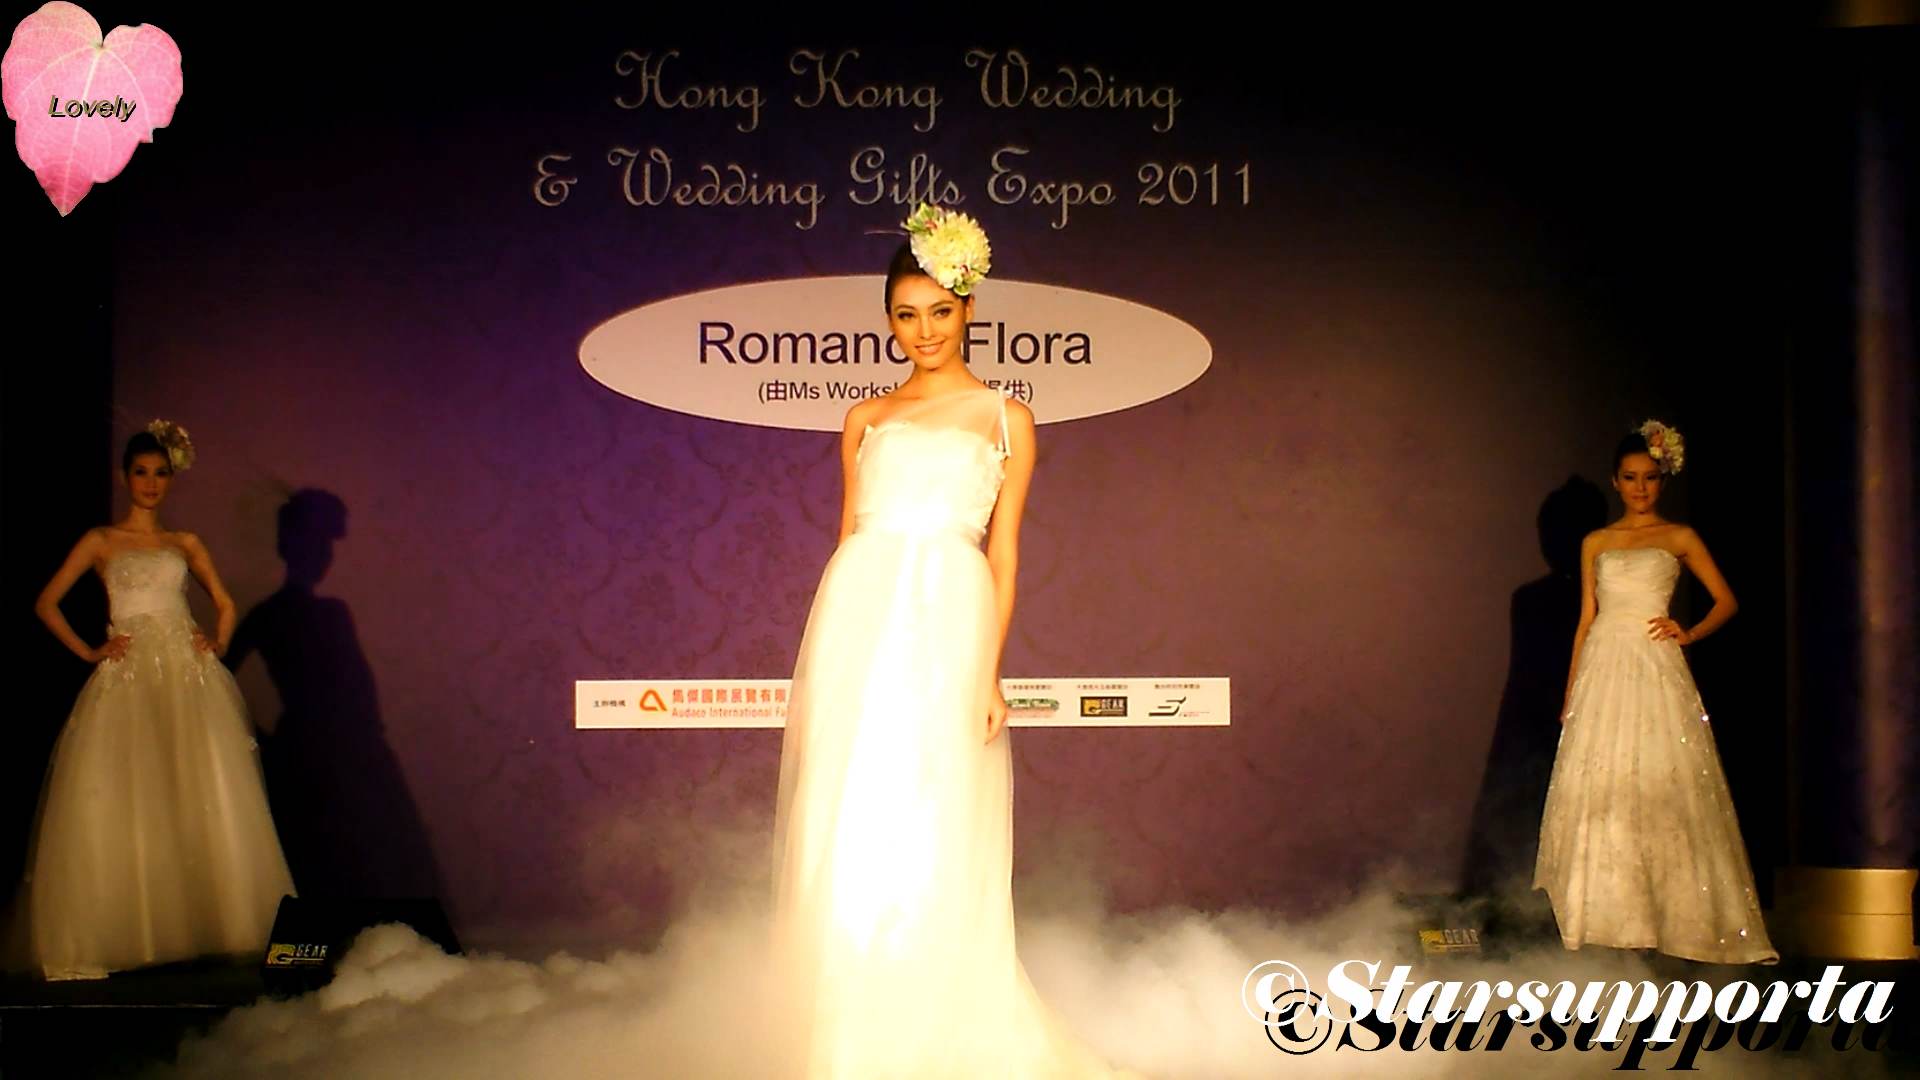 20110716 Hong Kong Wedding Expo - Ms Works: Romance Flora @ 香港會議展覽中心 HKCEC (video)